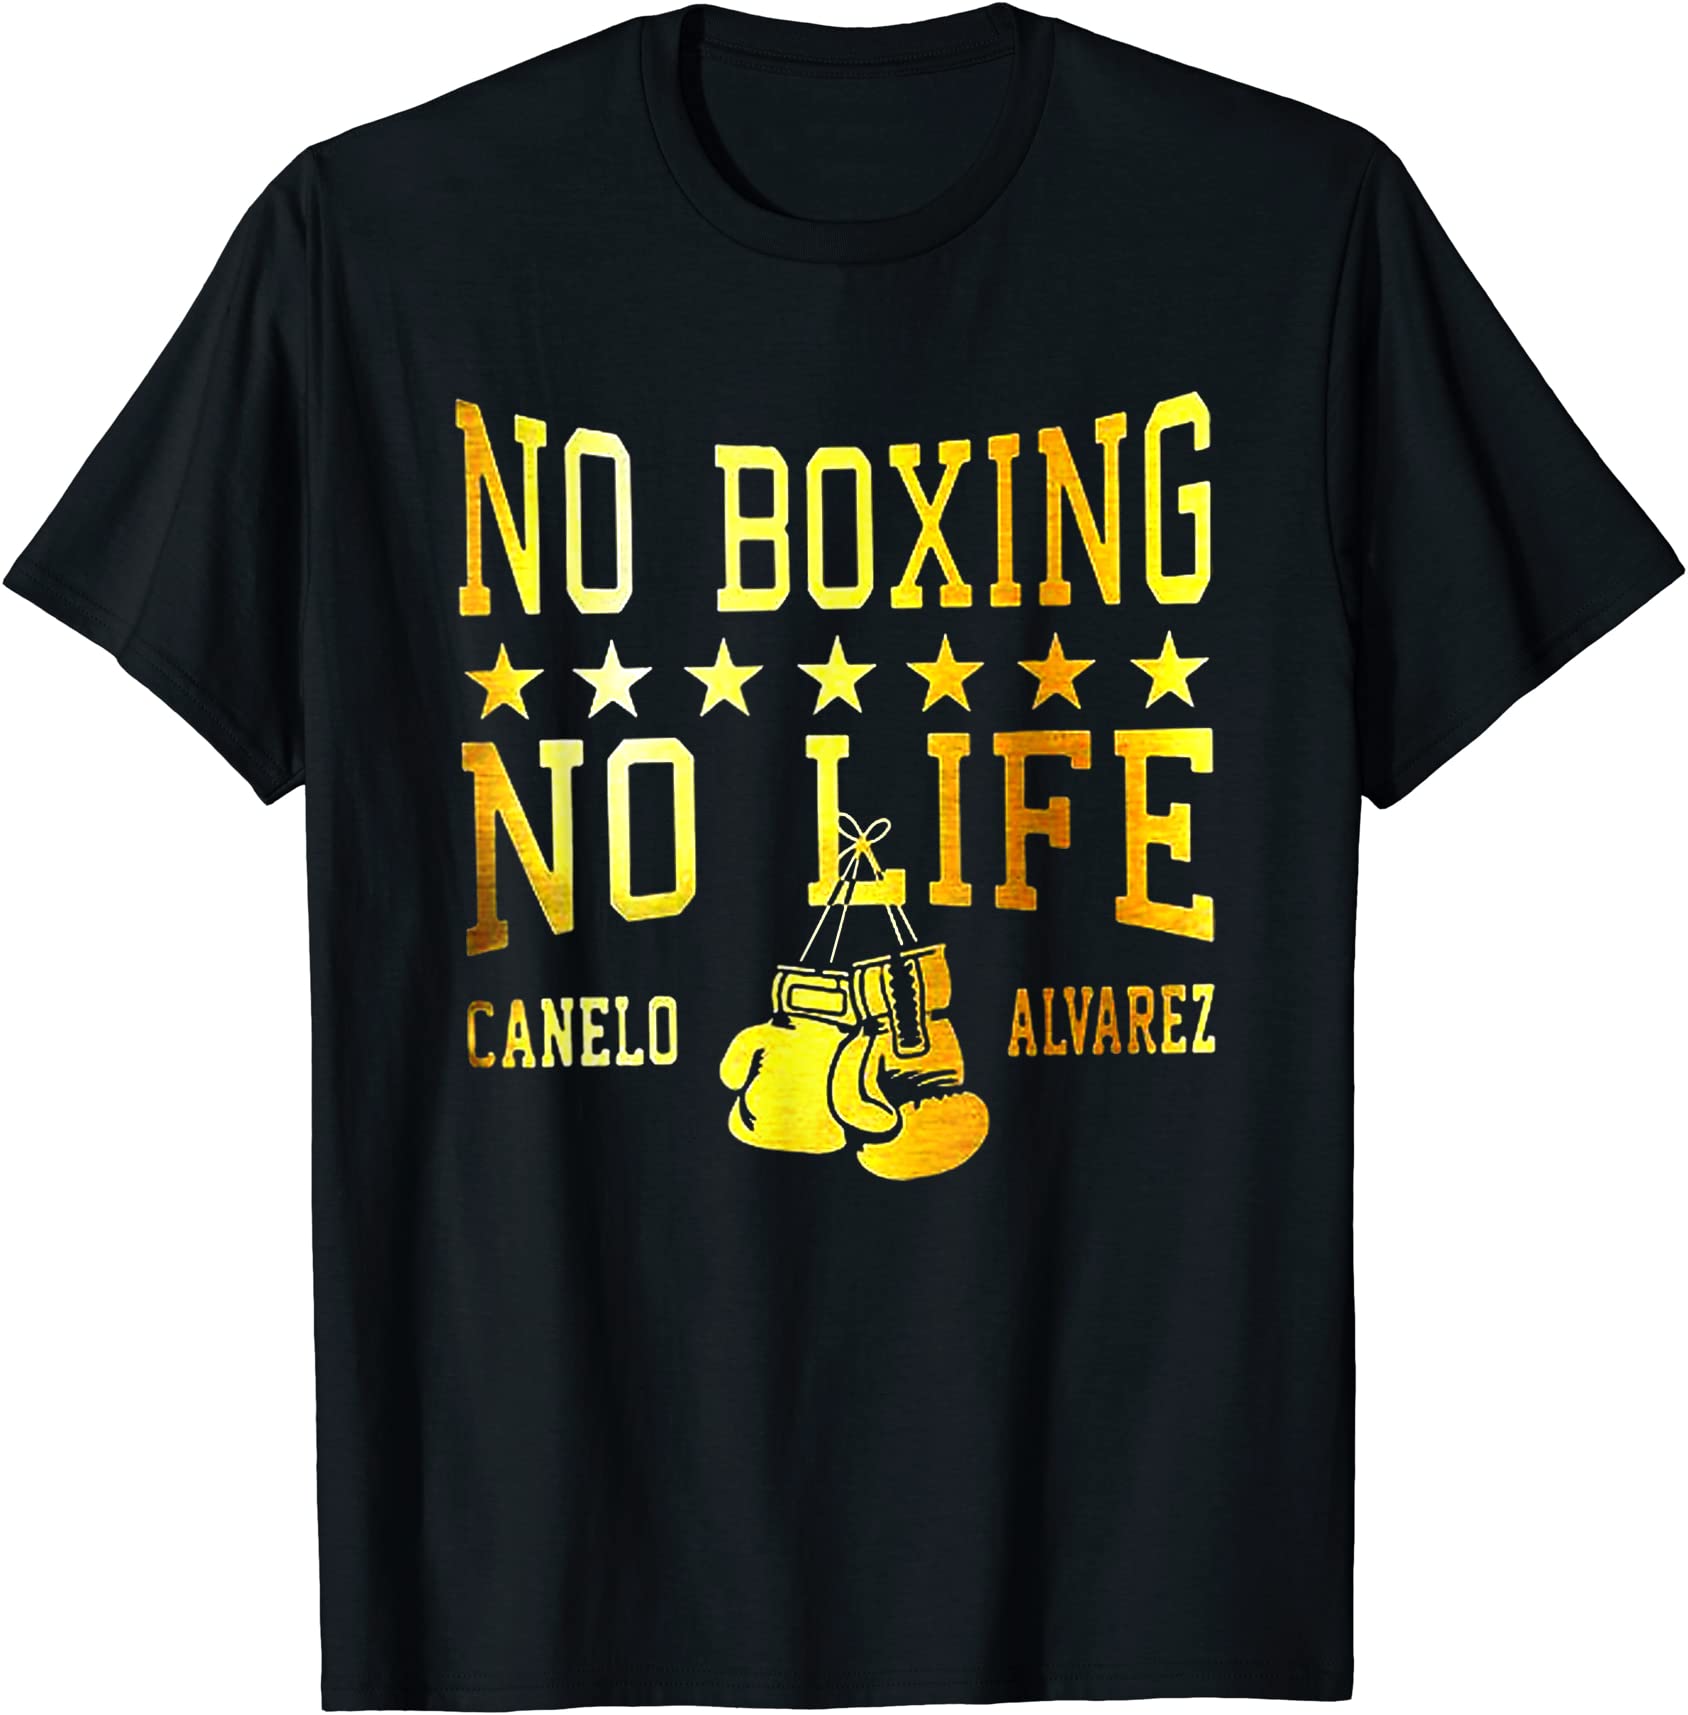 no boxing no life shirt men - Buy t-shirt designs